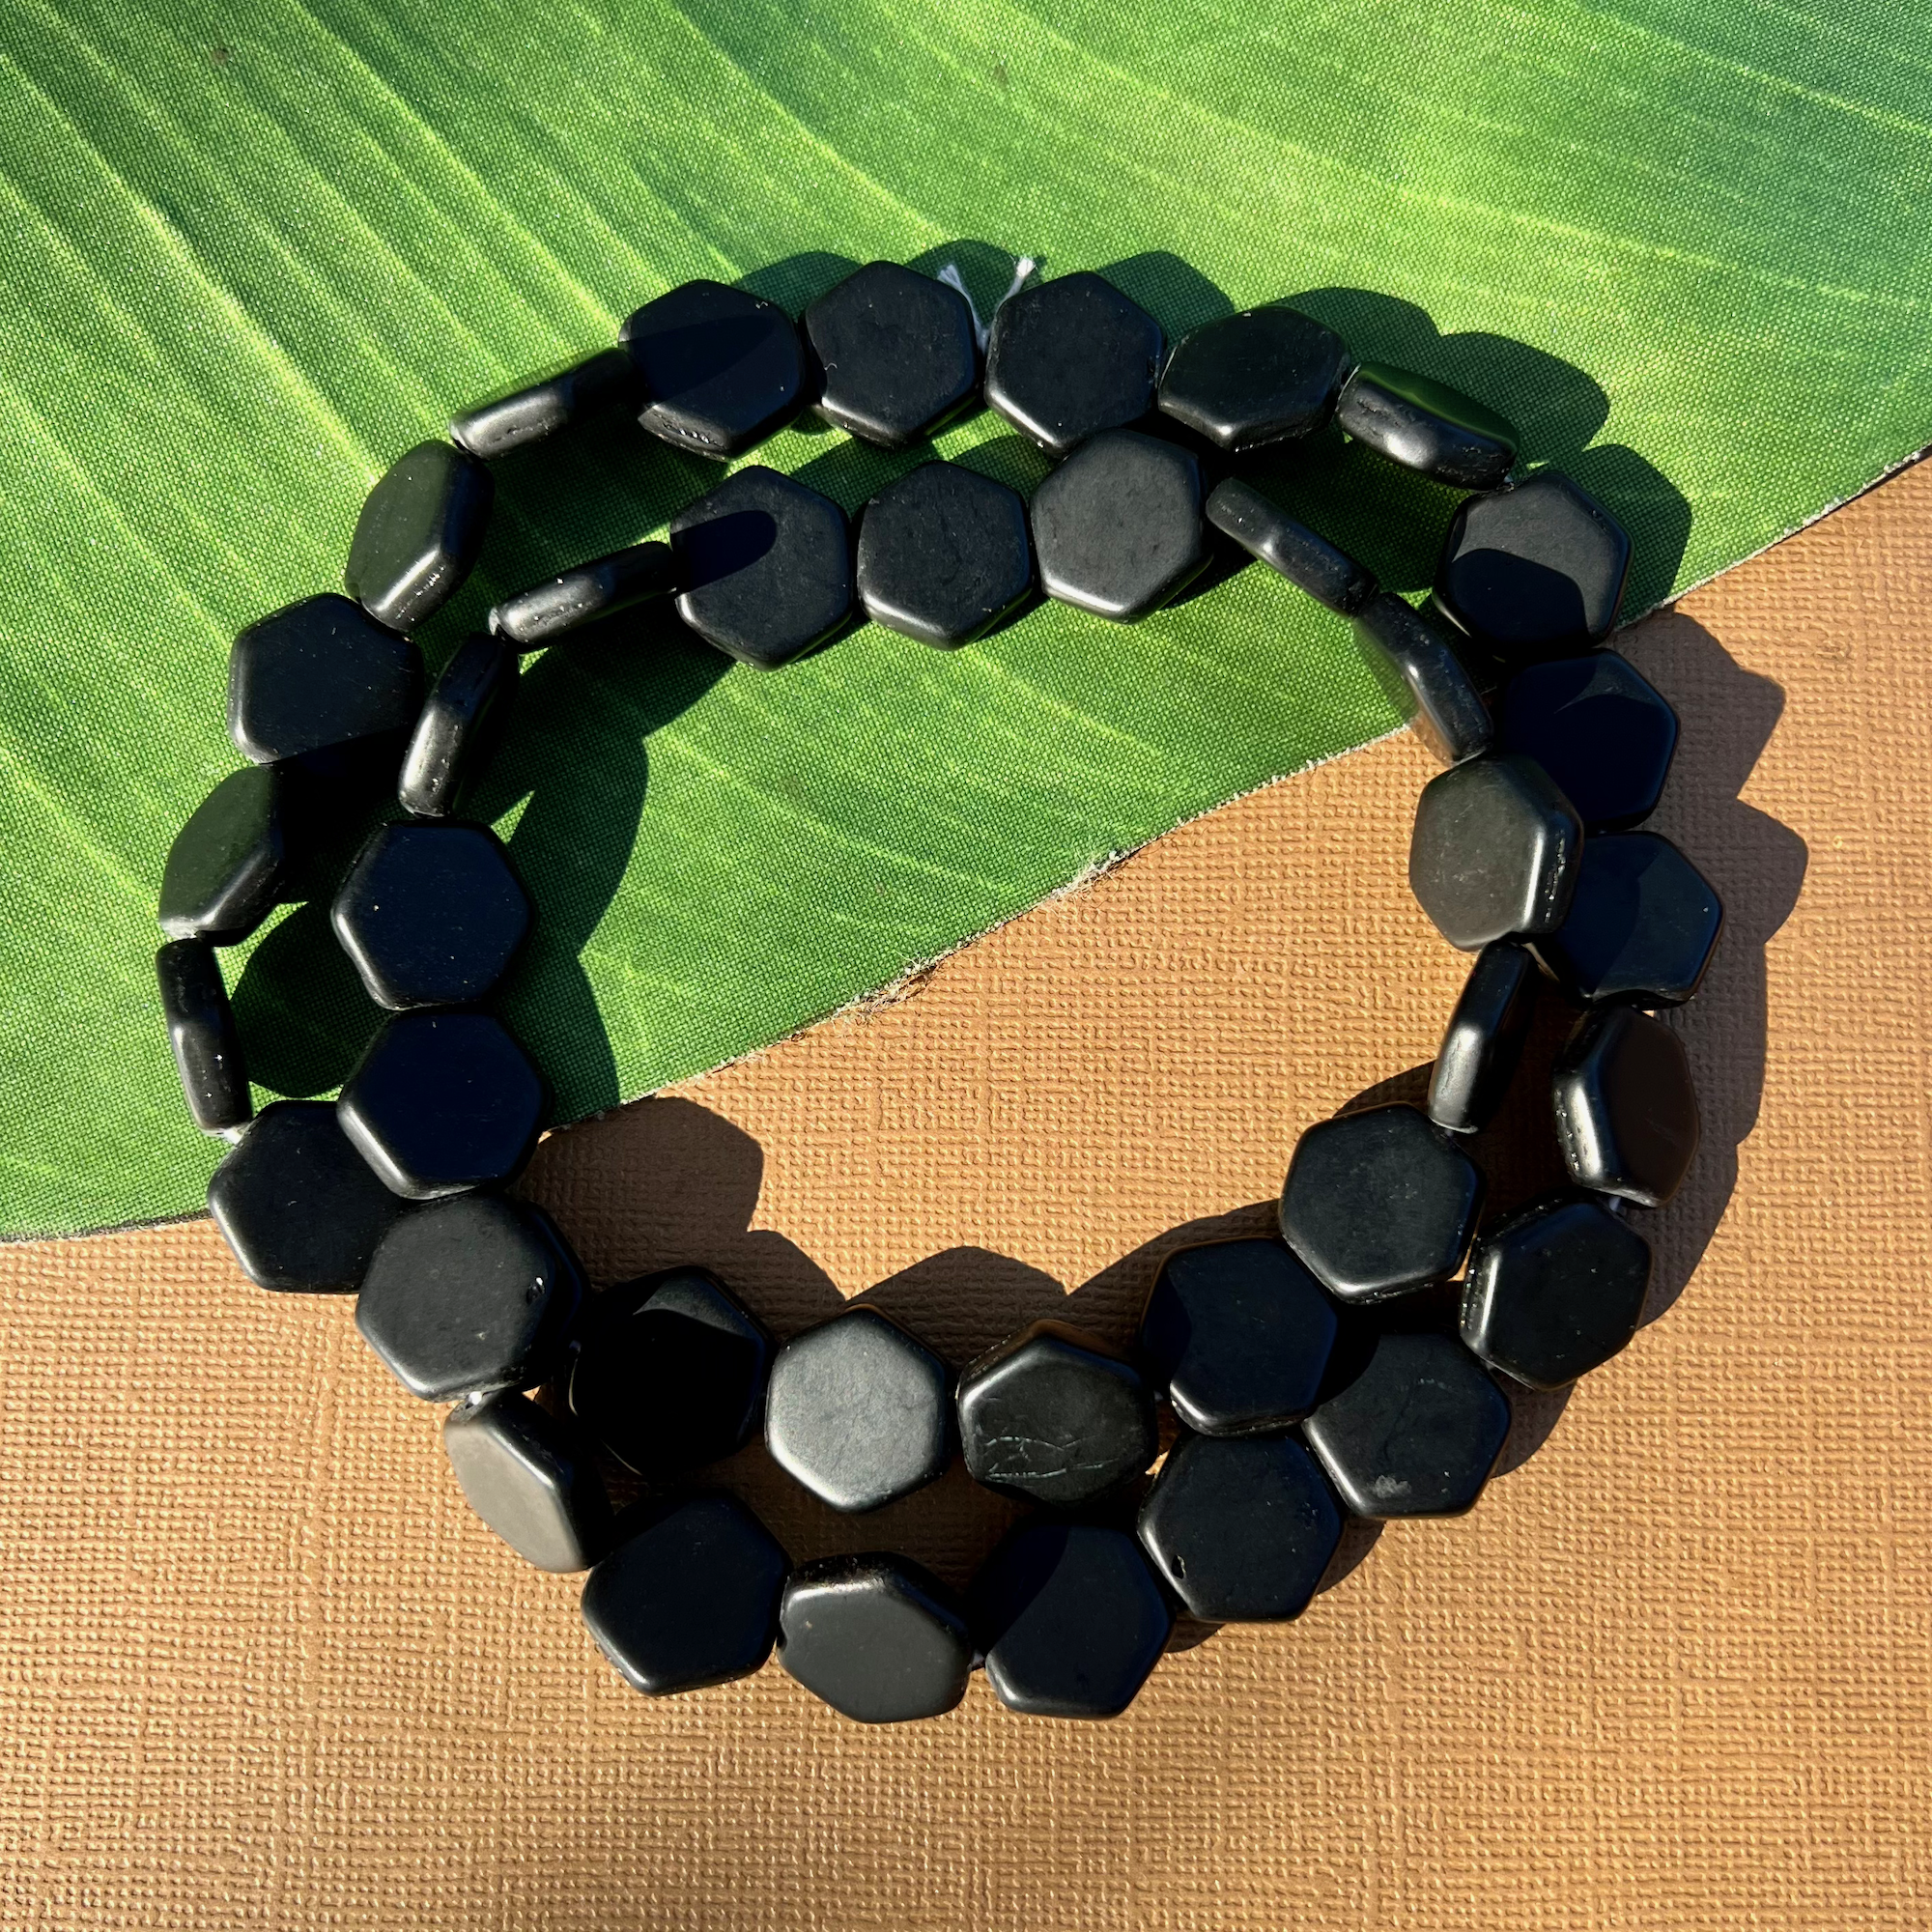 Black Hexagon Beads - 40 Pieces